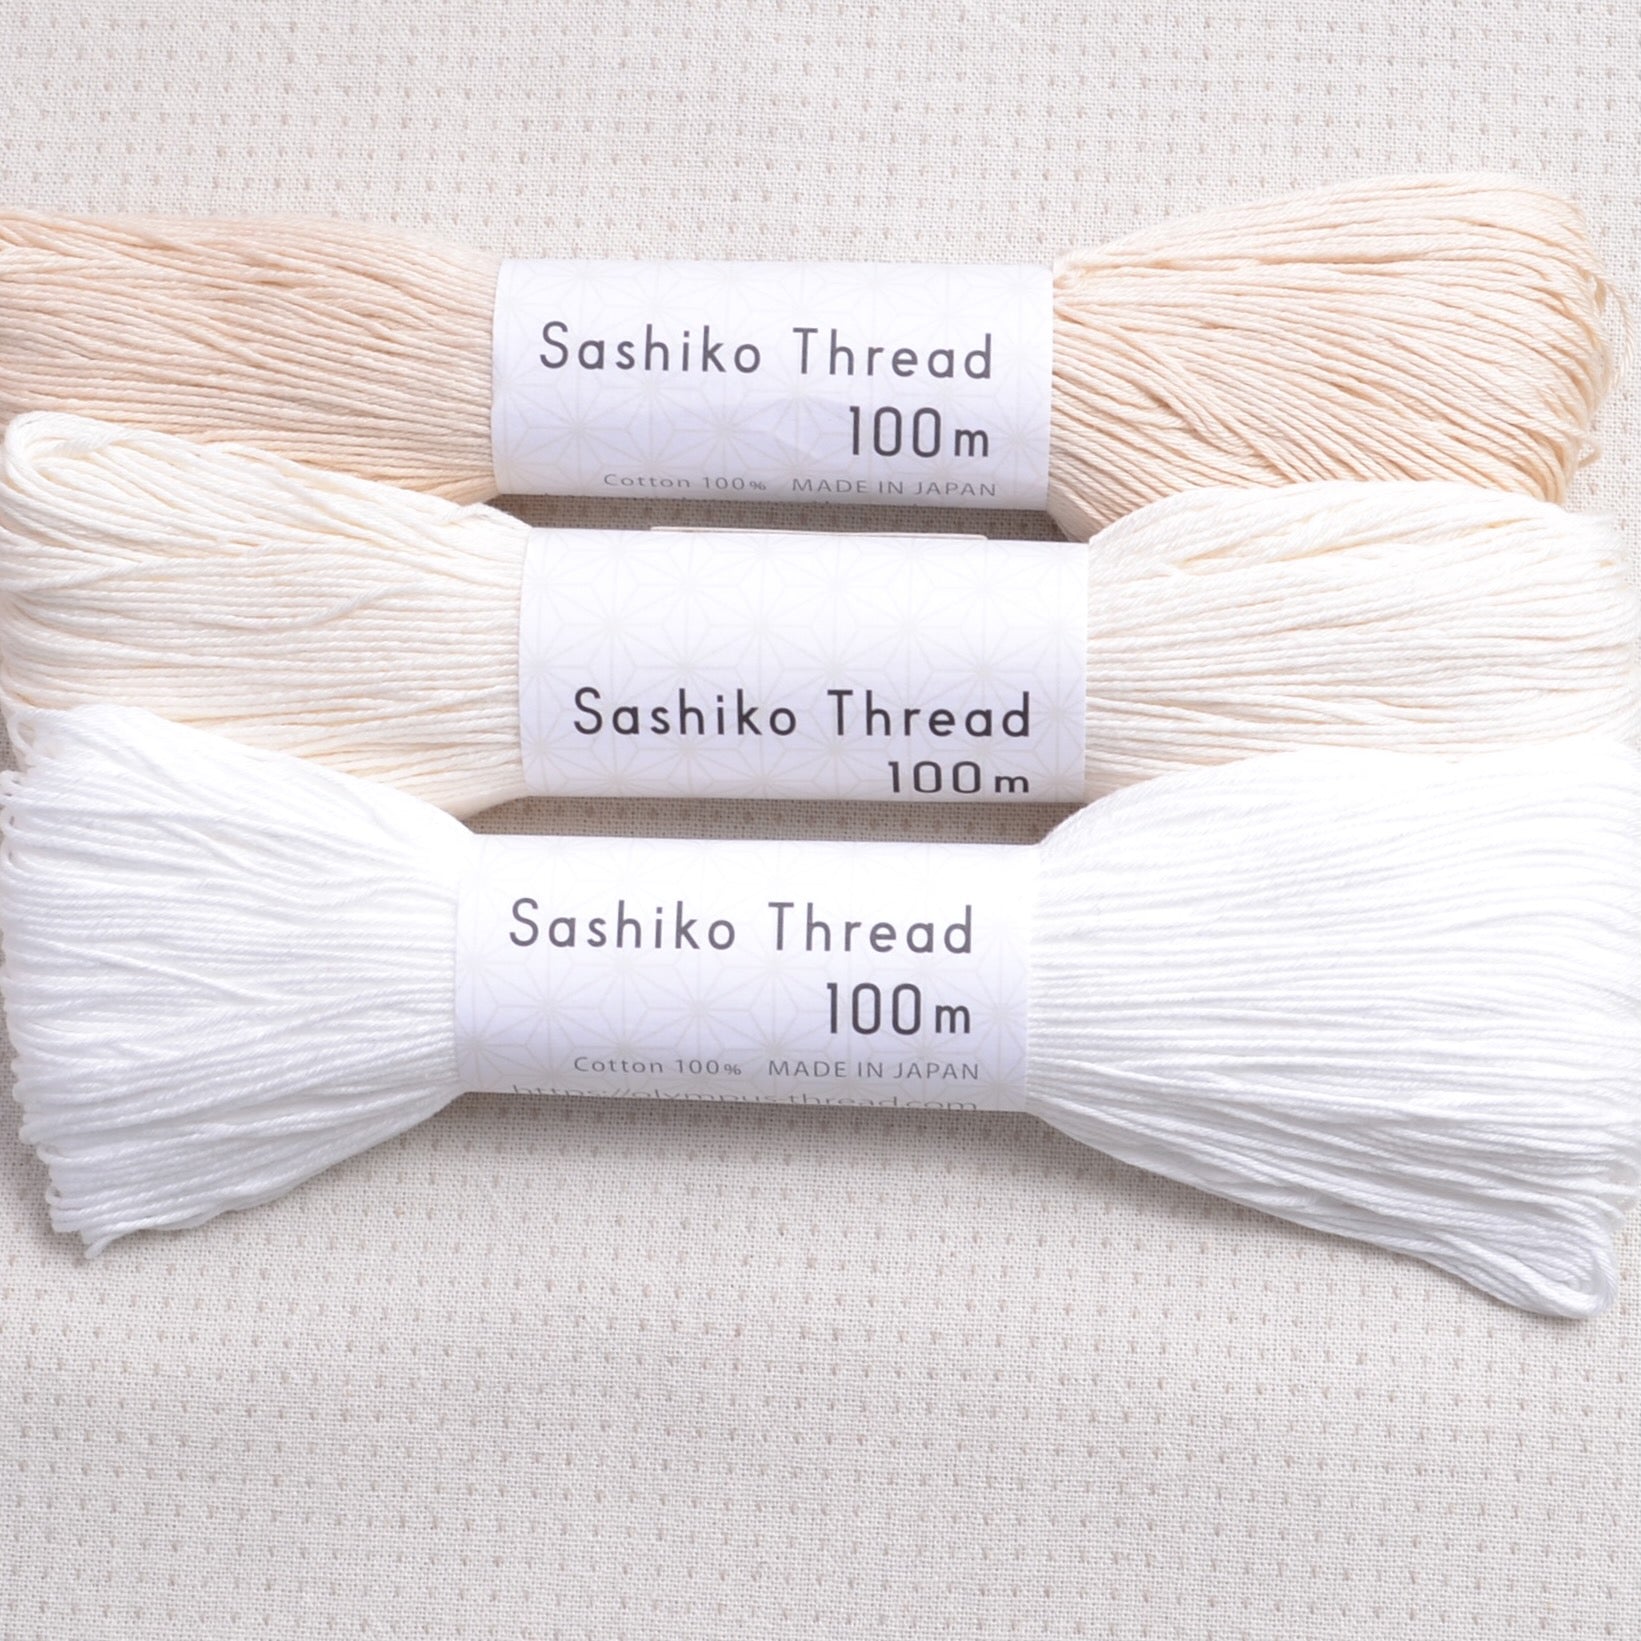 white, off white and ivory white sashiko threads